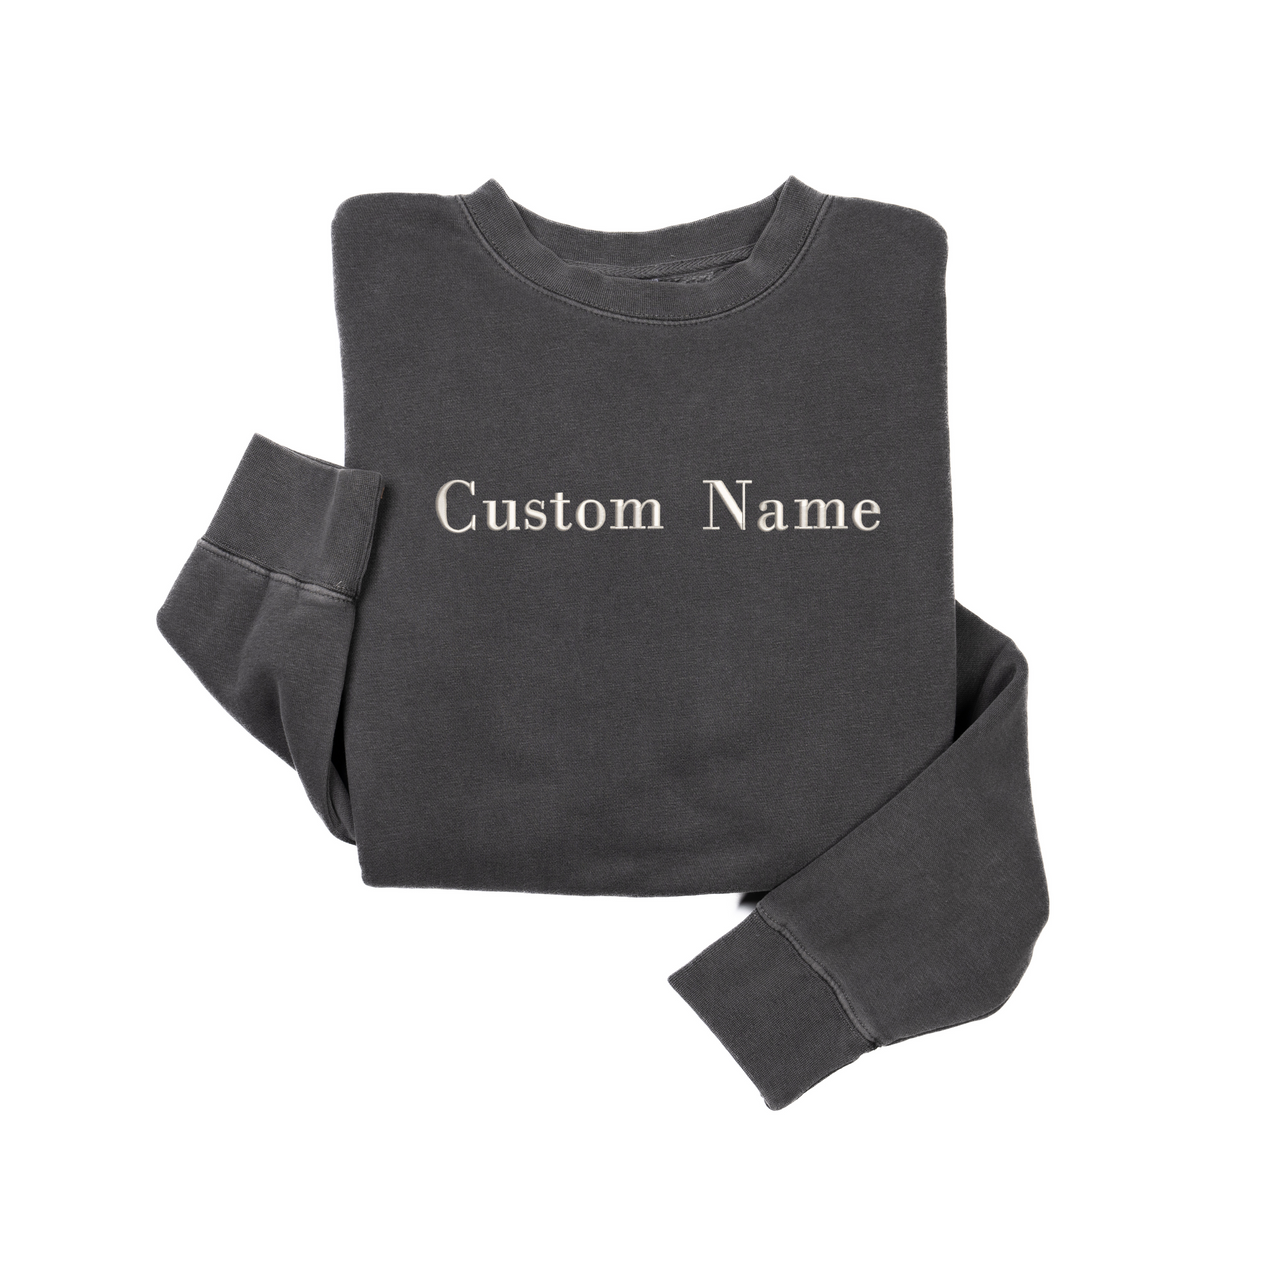 Custom Embroidered Name - Vintage Wash Sweatshirt (Charcoal)